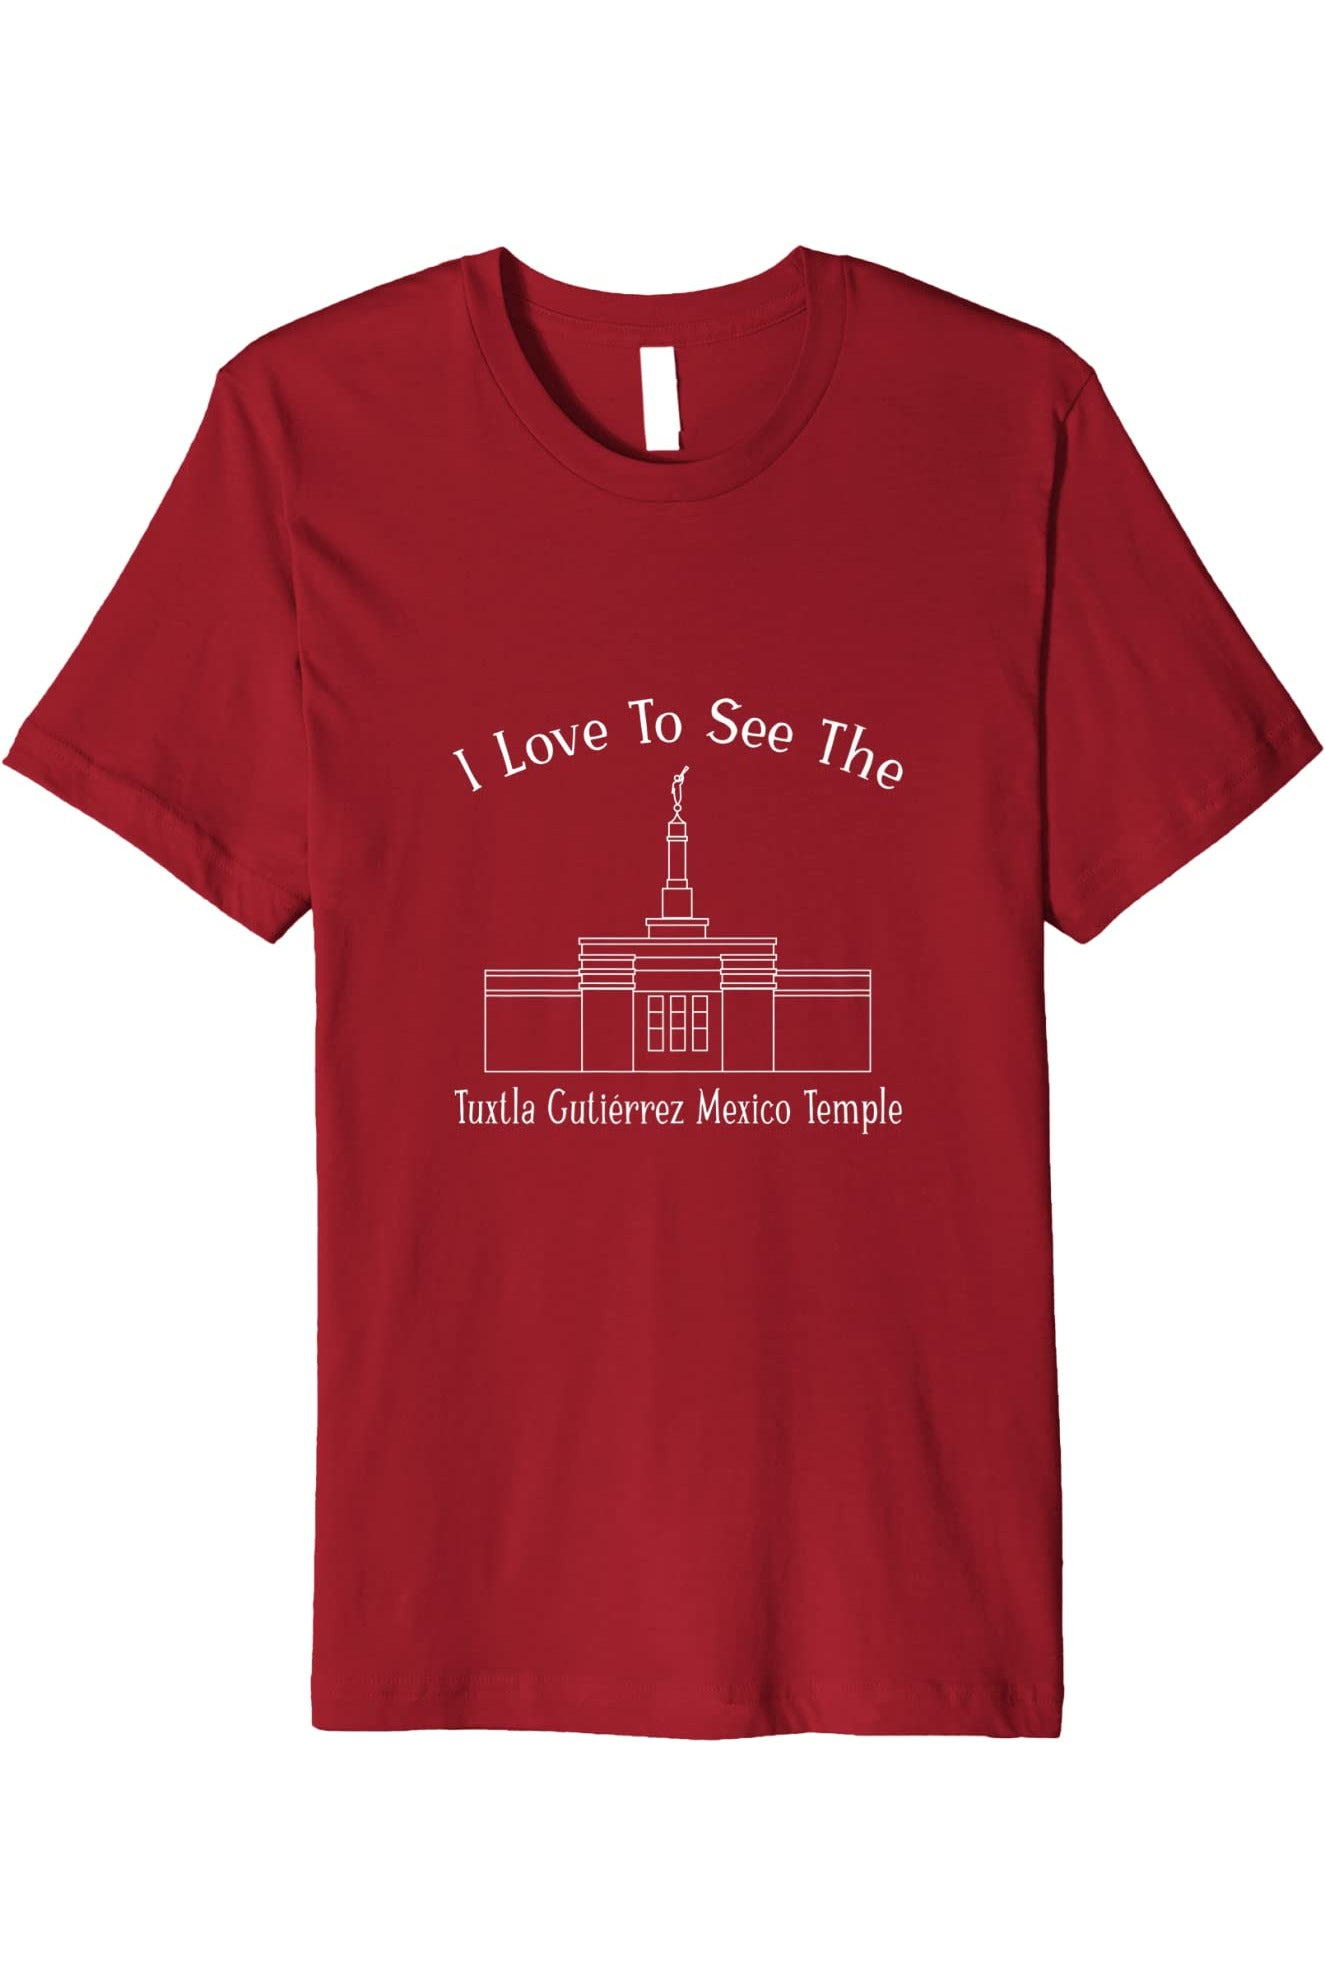 Tuxtla Gutierrez Mexico Temple T-Shirt - Premium - Happy Style (English) US